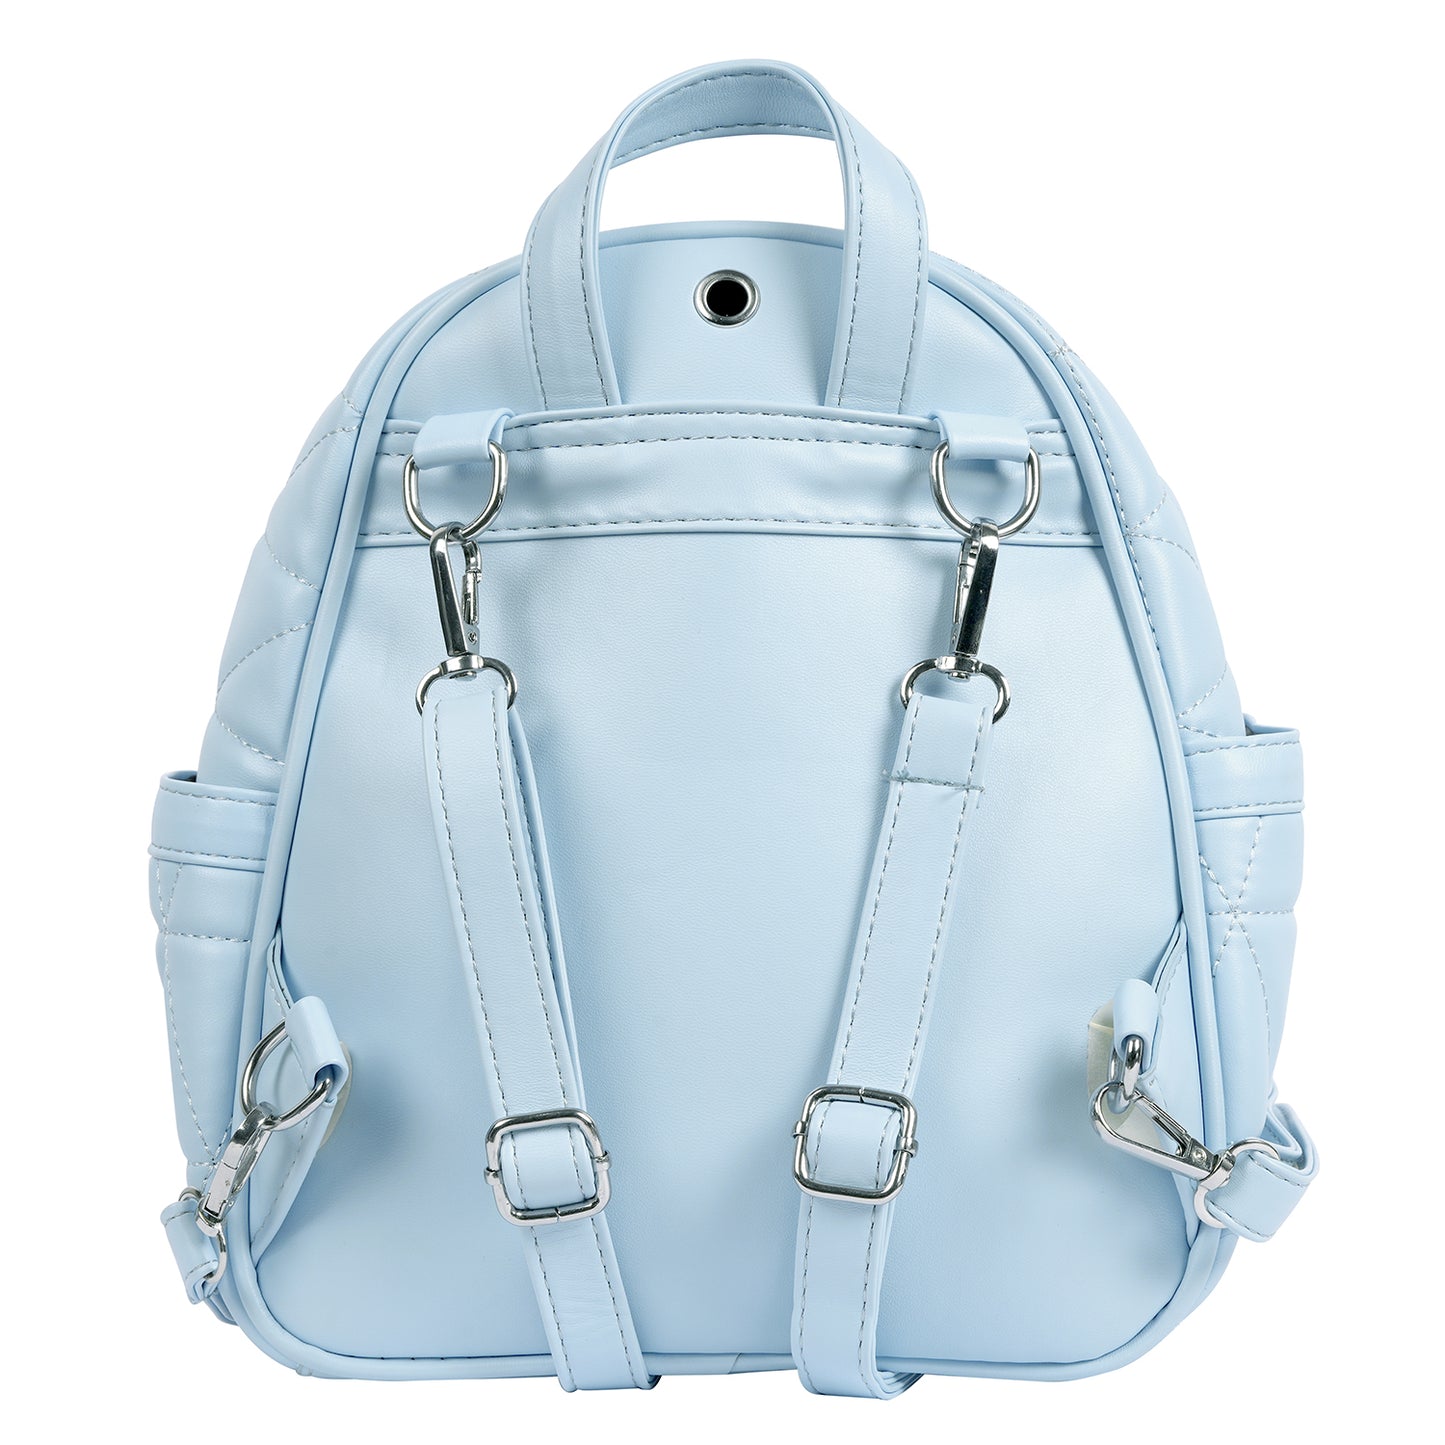 Angeline's small Size Luxury Women Backpack